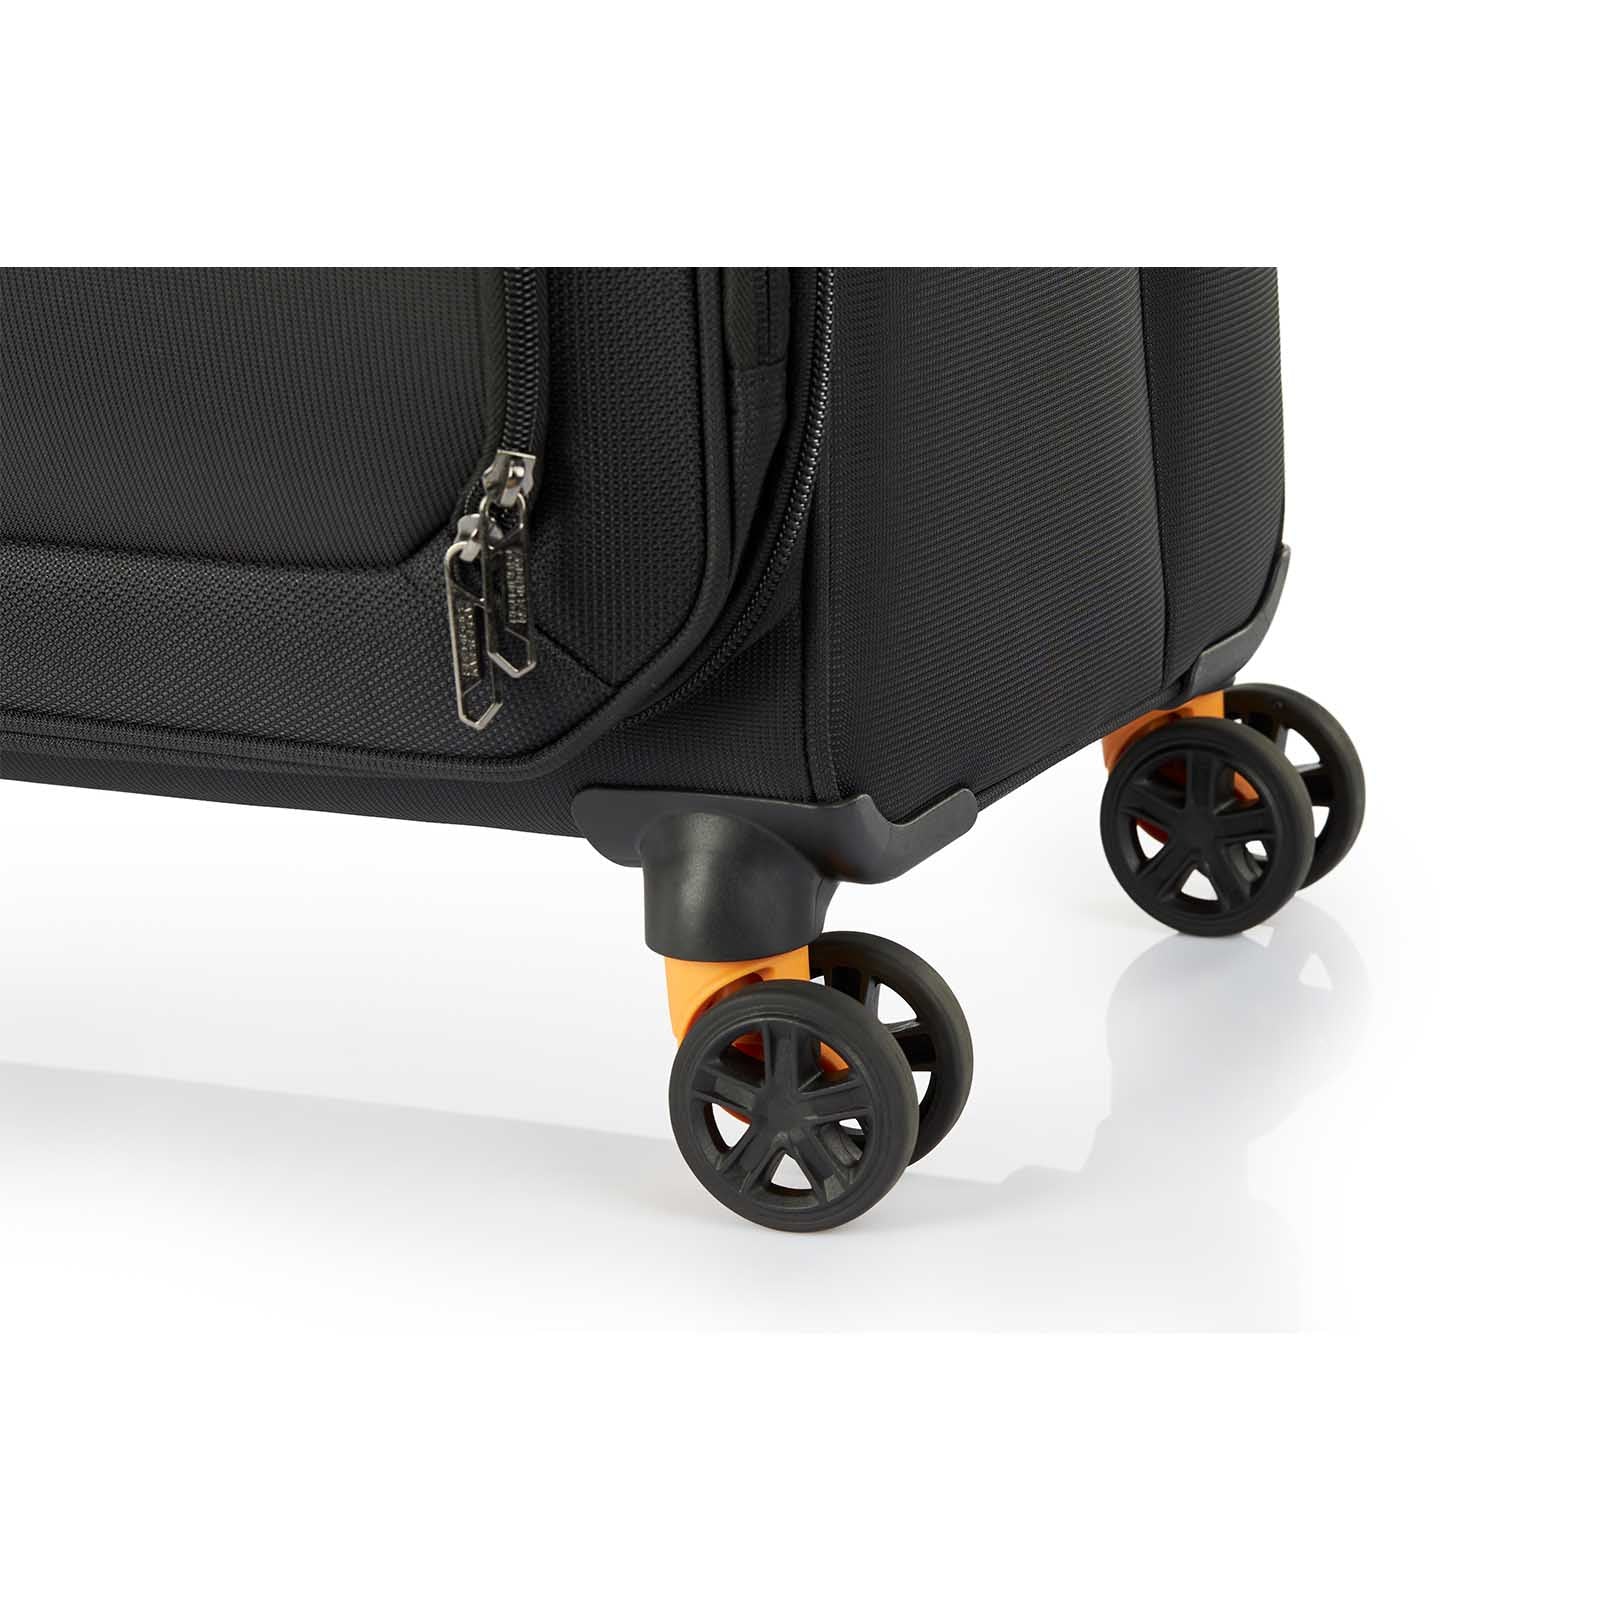 American-Tourister-Applite-4-Eco-71cm-Suitcase-Black-Mustard-Wheels